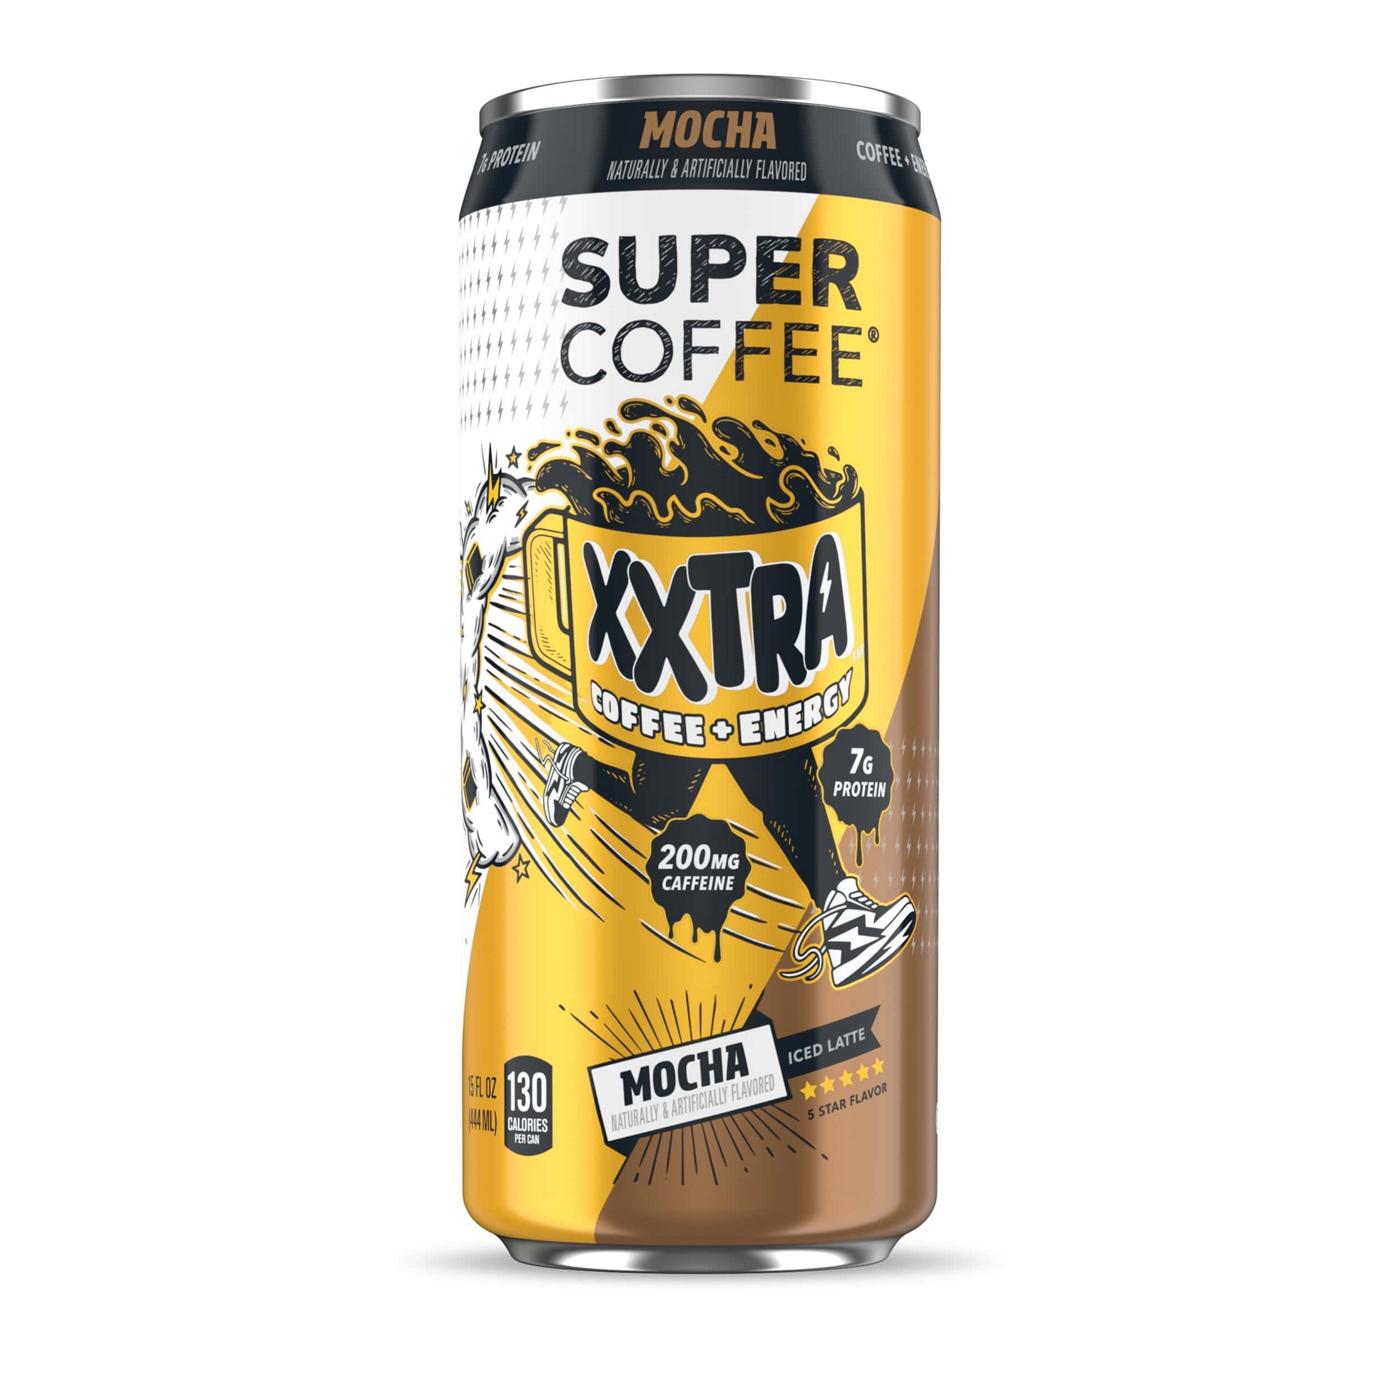 Kitu Super Coffee XXTRA Mocha Iced Latte; image 1 of 3